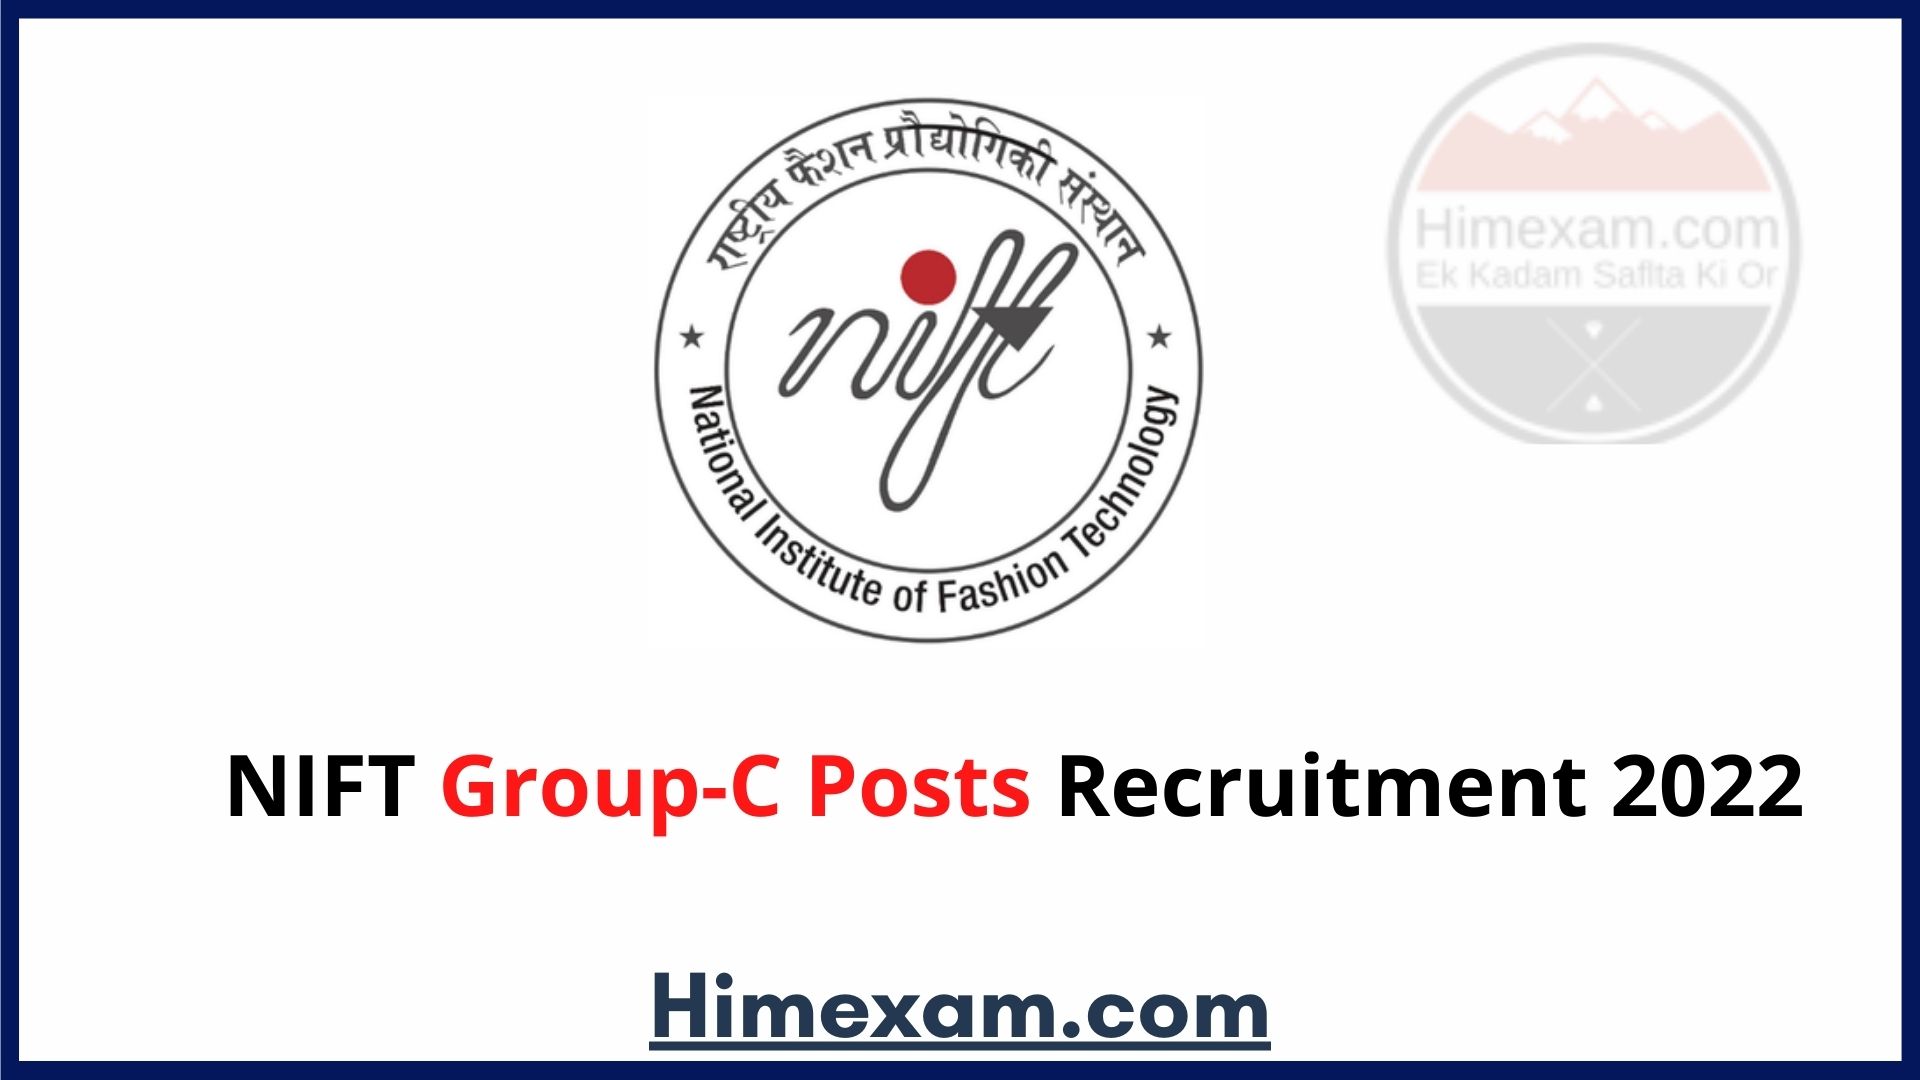 NIFT Group-C Posts Recruitment 2022